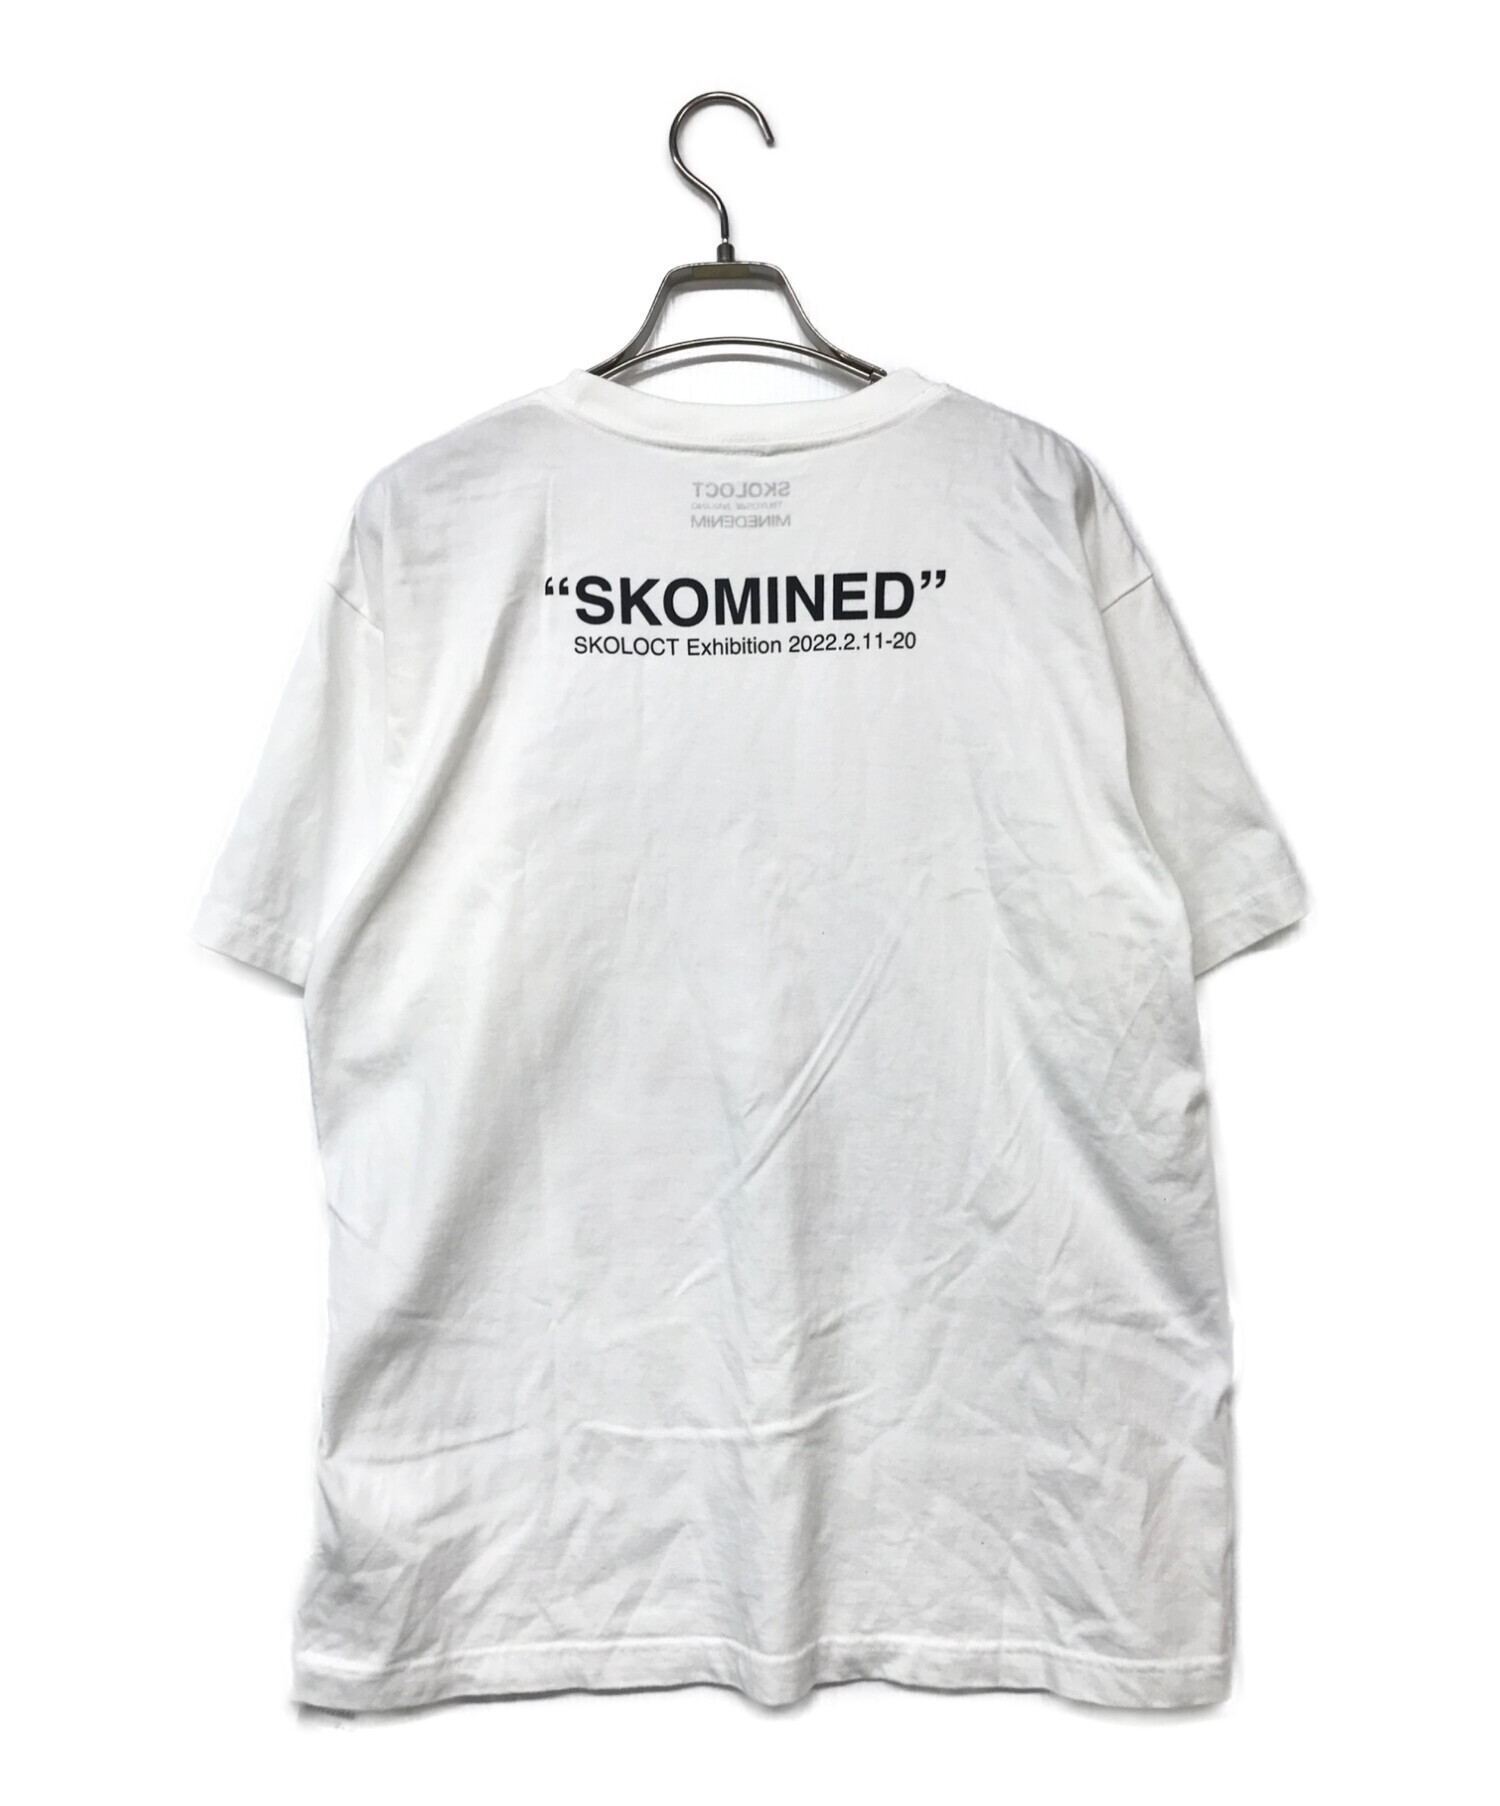 MINEDENIM (マインデニム) SKOLOCT (スコロクト) ガールプリントTシャツ ホワイト サイズ:M